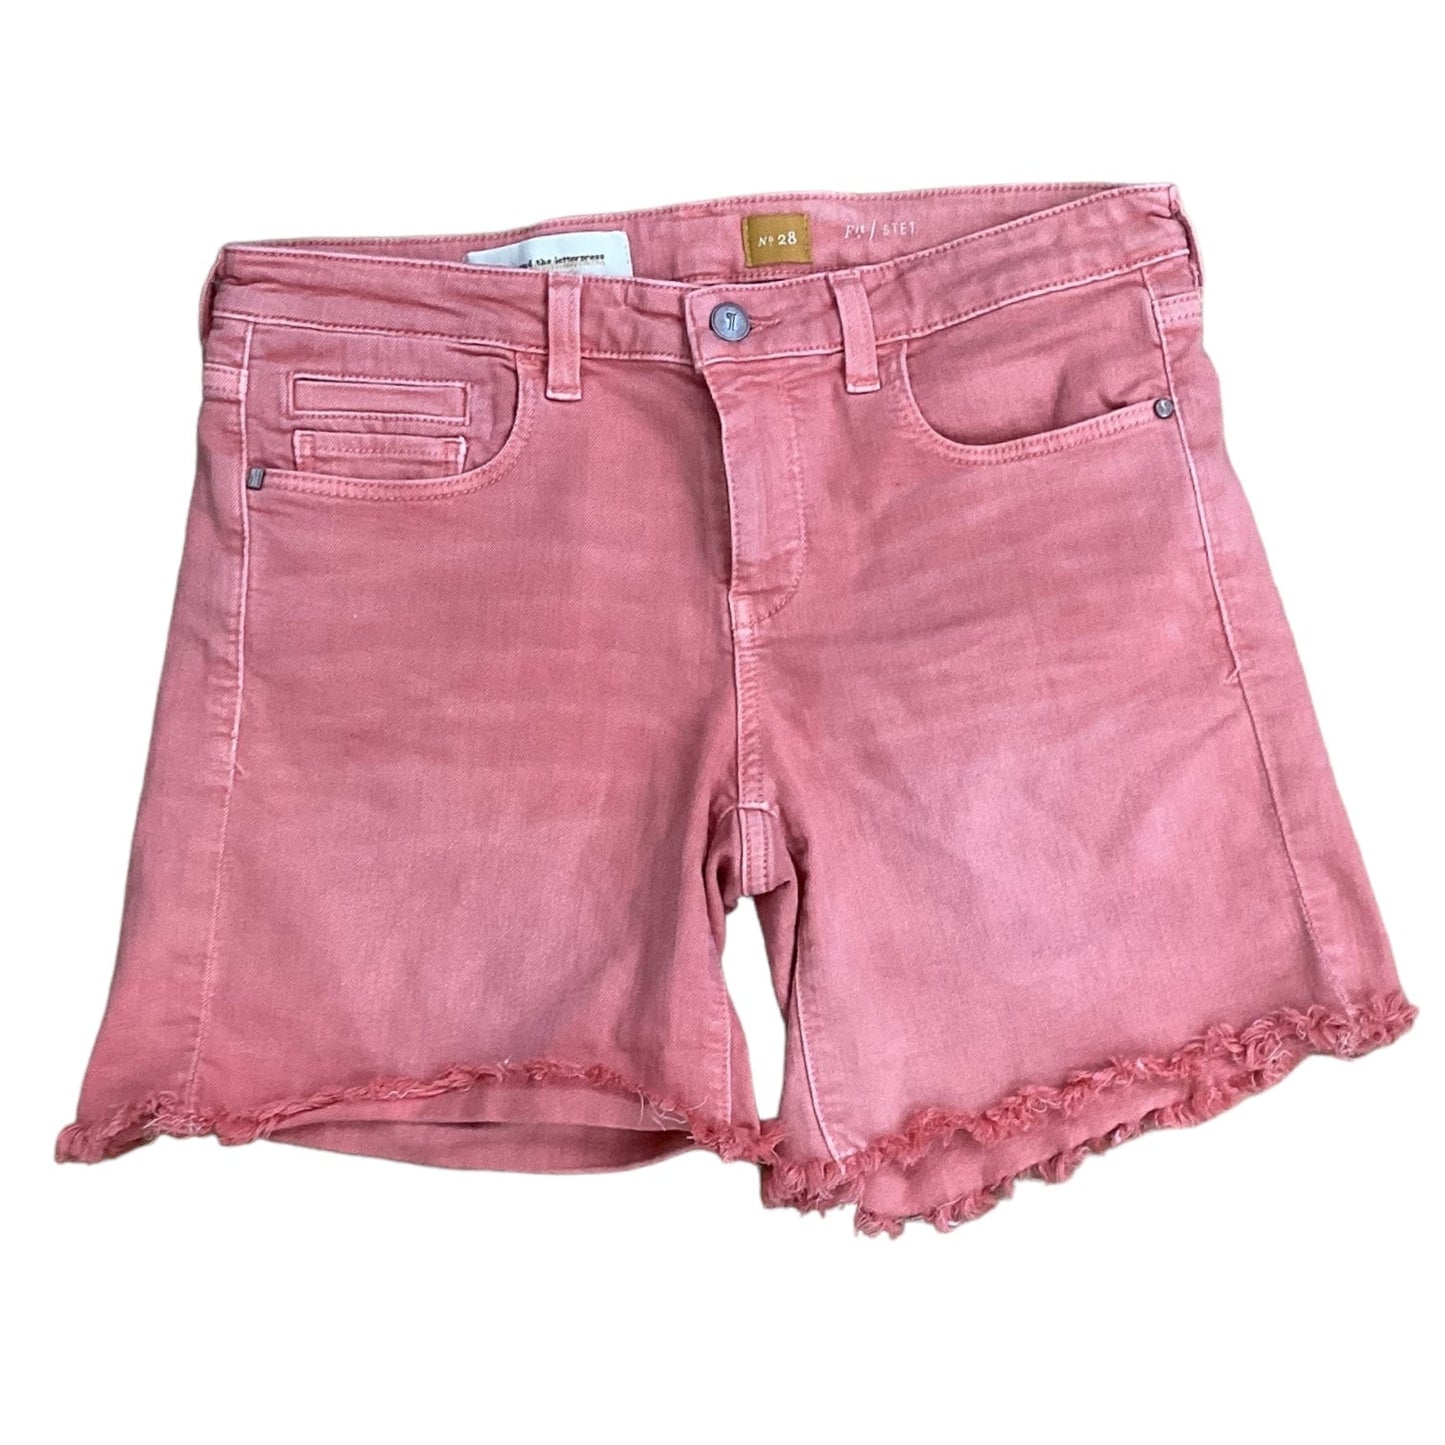 Pink Shorts Pilcro, Size 6